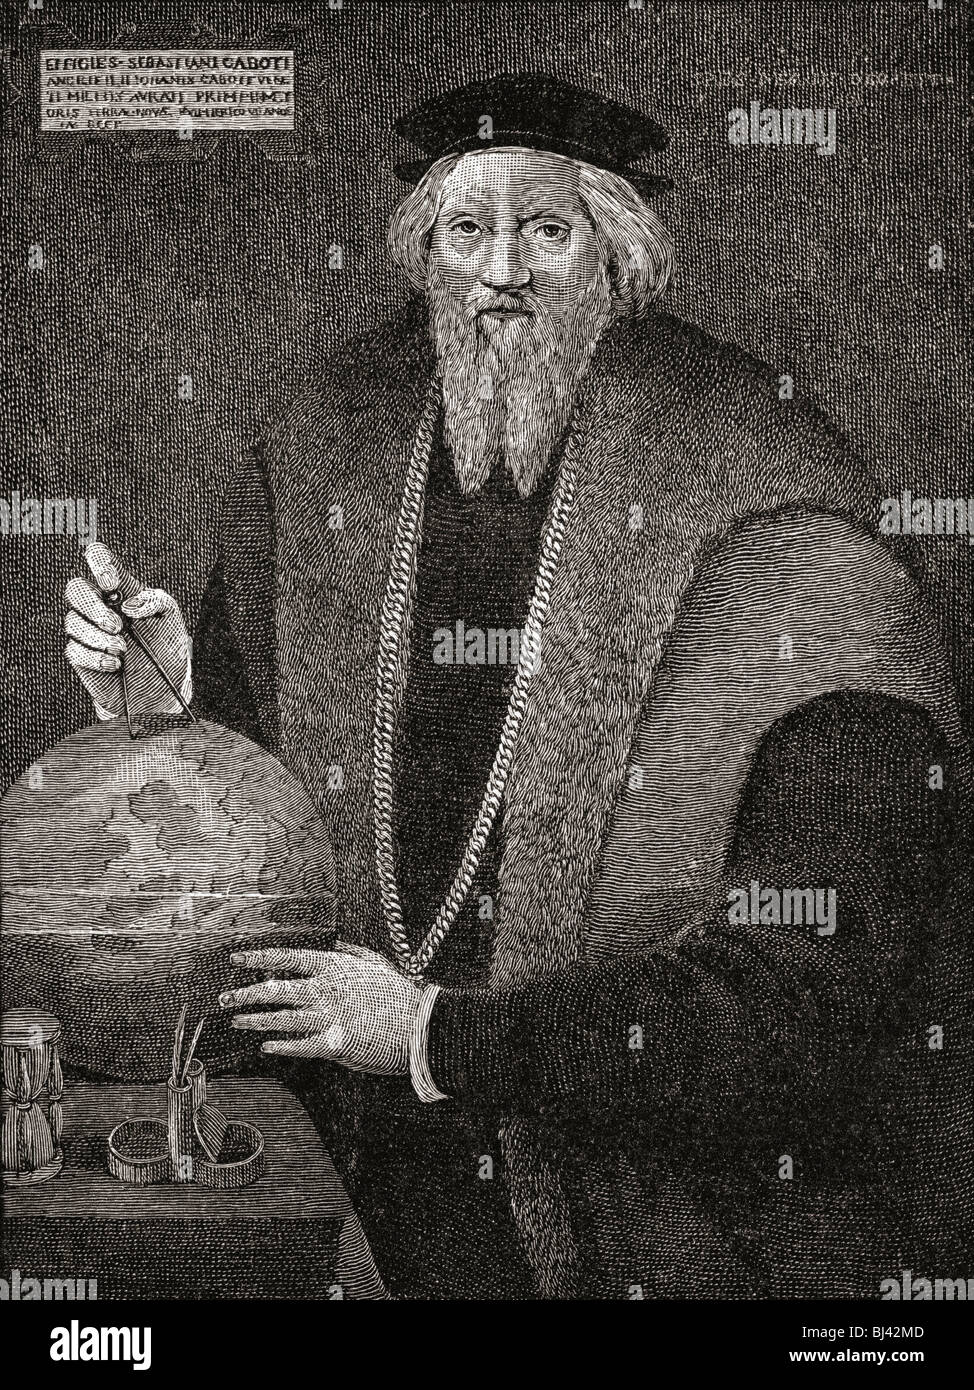 Sebastian Cabot, c. 1474 to c. 1557. Italian explorer. Stock Photo